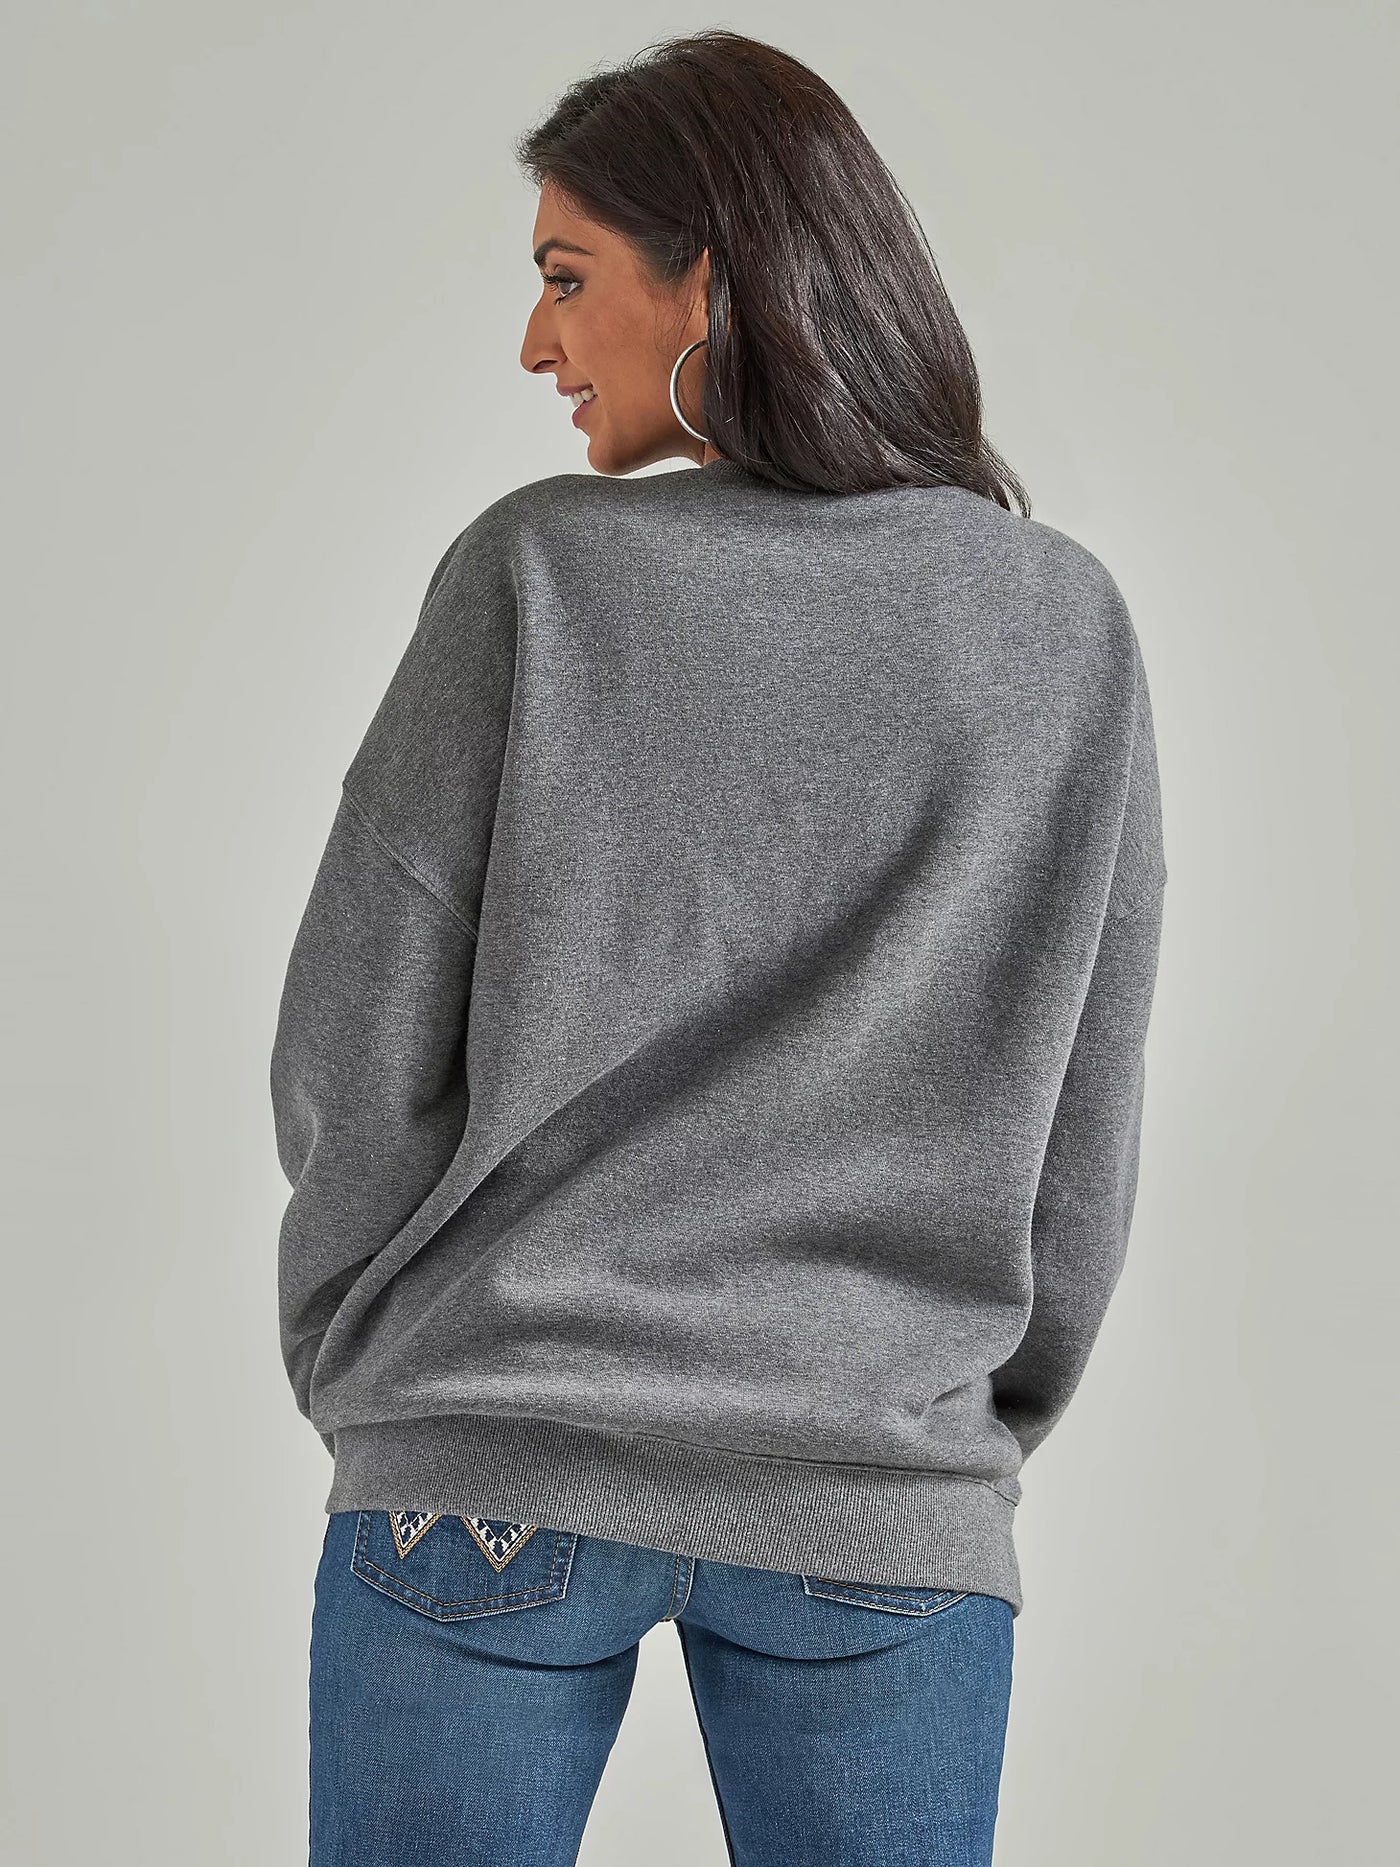 Wrangler Midnight Cowgirl Grey Sweatshirt